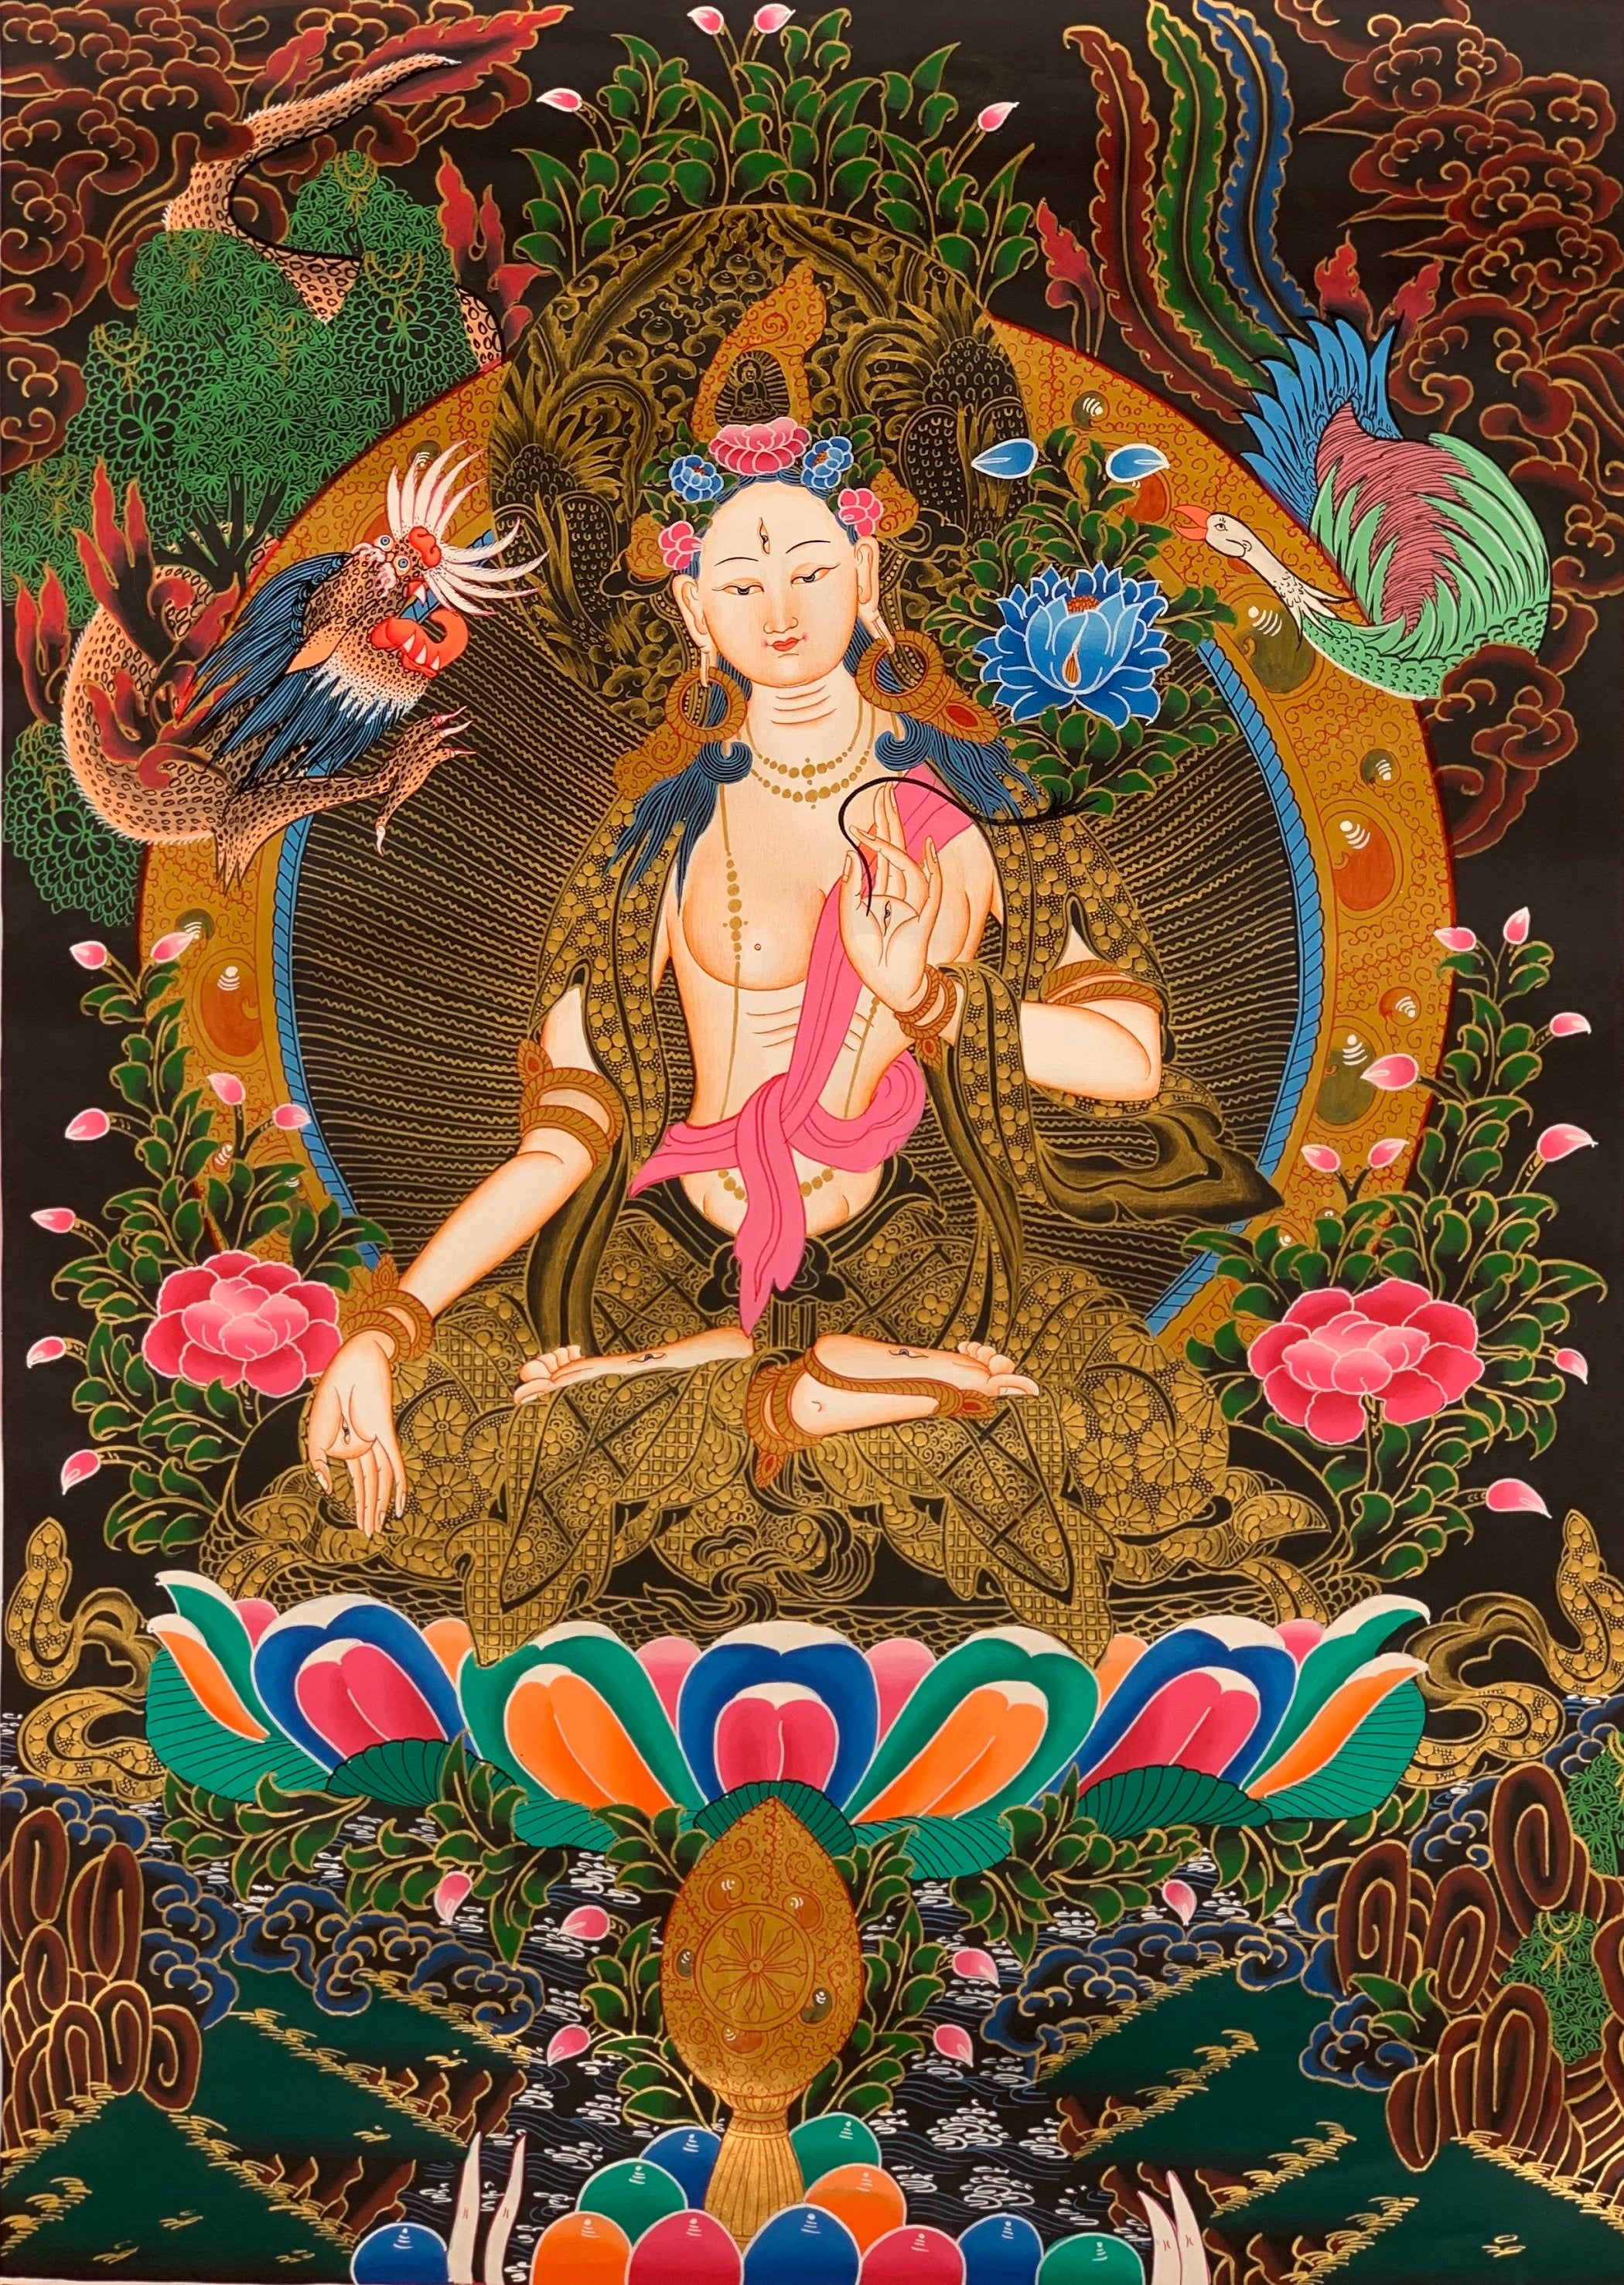 About White Tara Thangka Painting Thangka Painting Buddhist Art | My ...